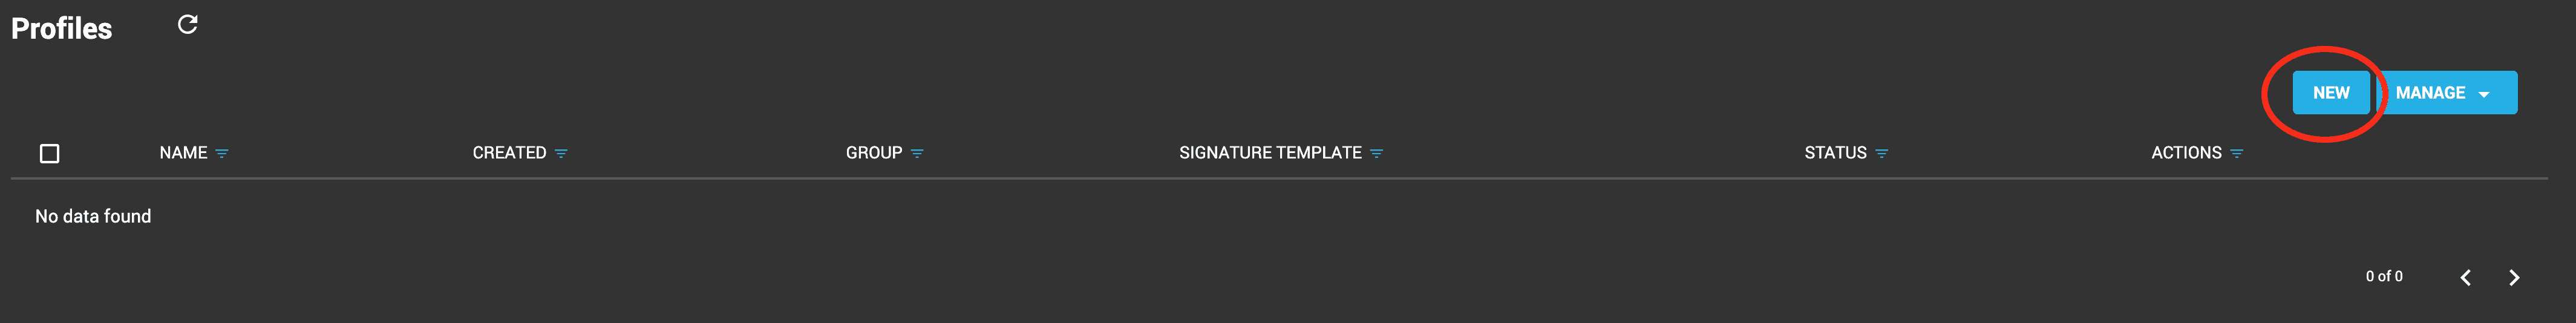 signature_new_profile